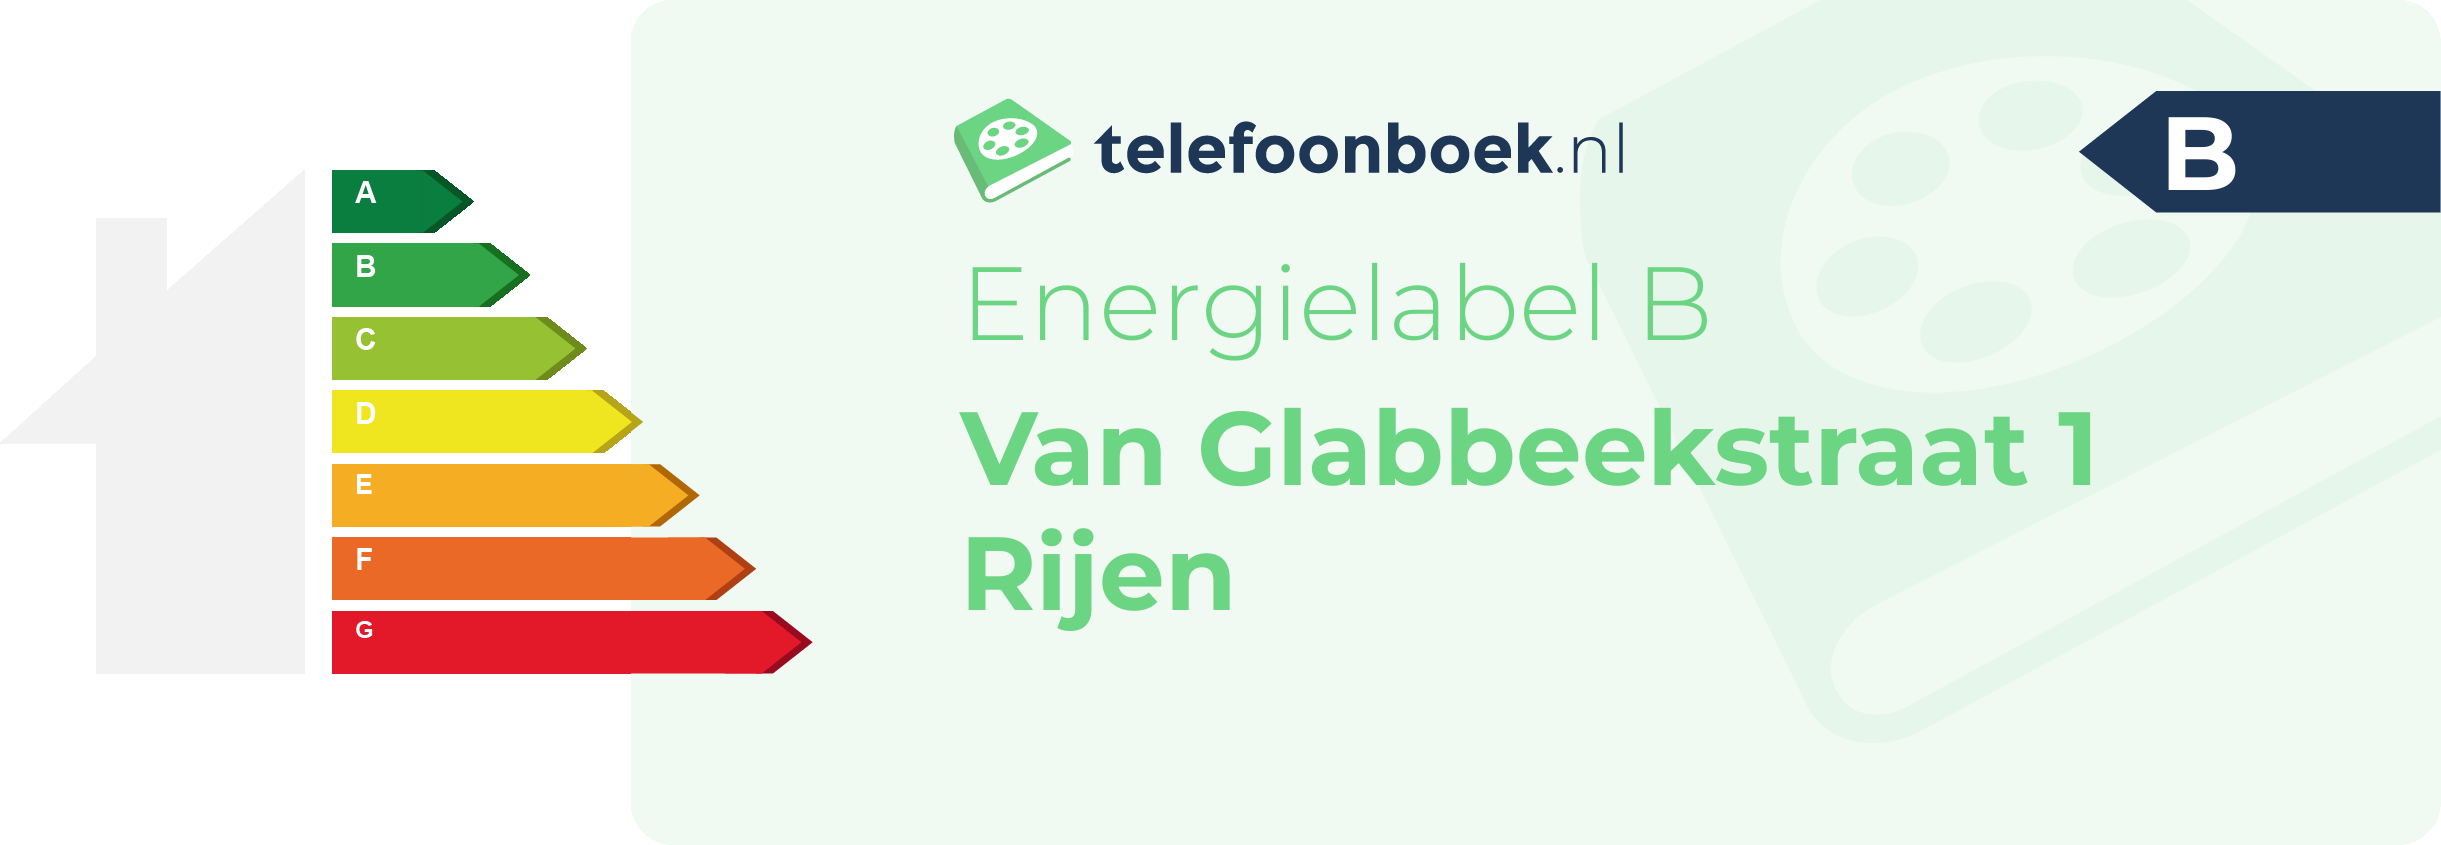 Energielabel Van Glabbeekstraat 1 Rijen